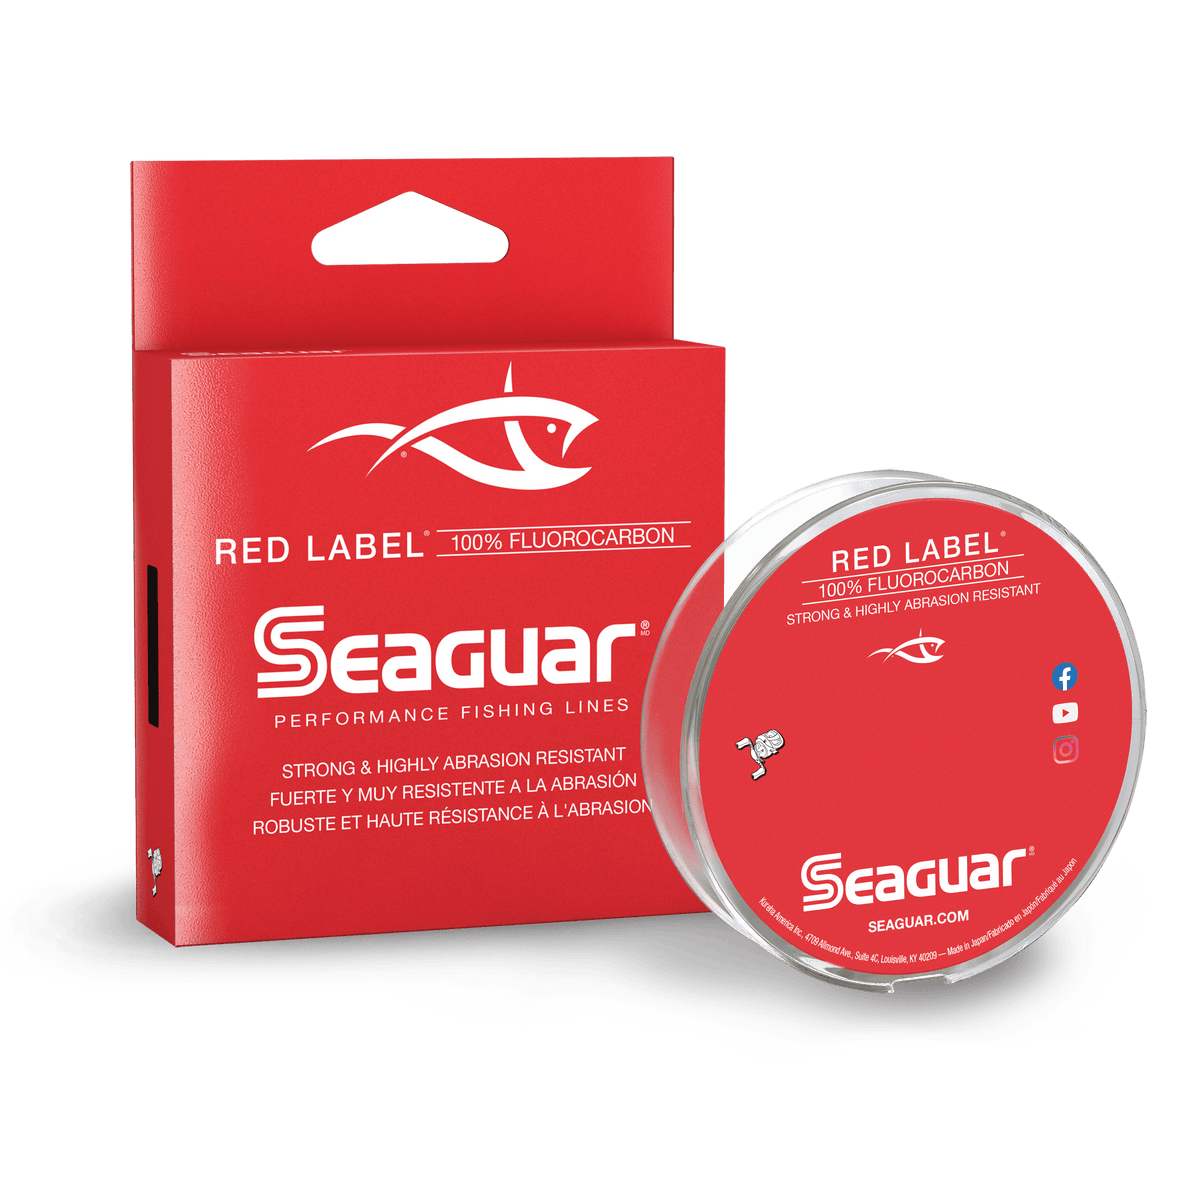 Seaguar BasiX Fluorocarbon Line - Webb's Sporting Goods